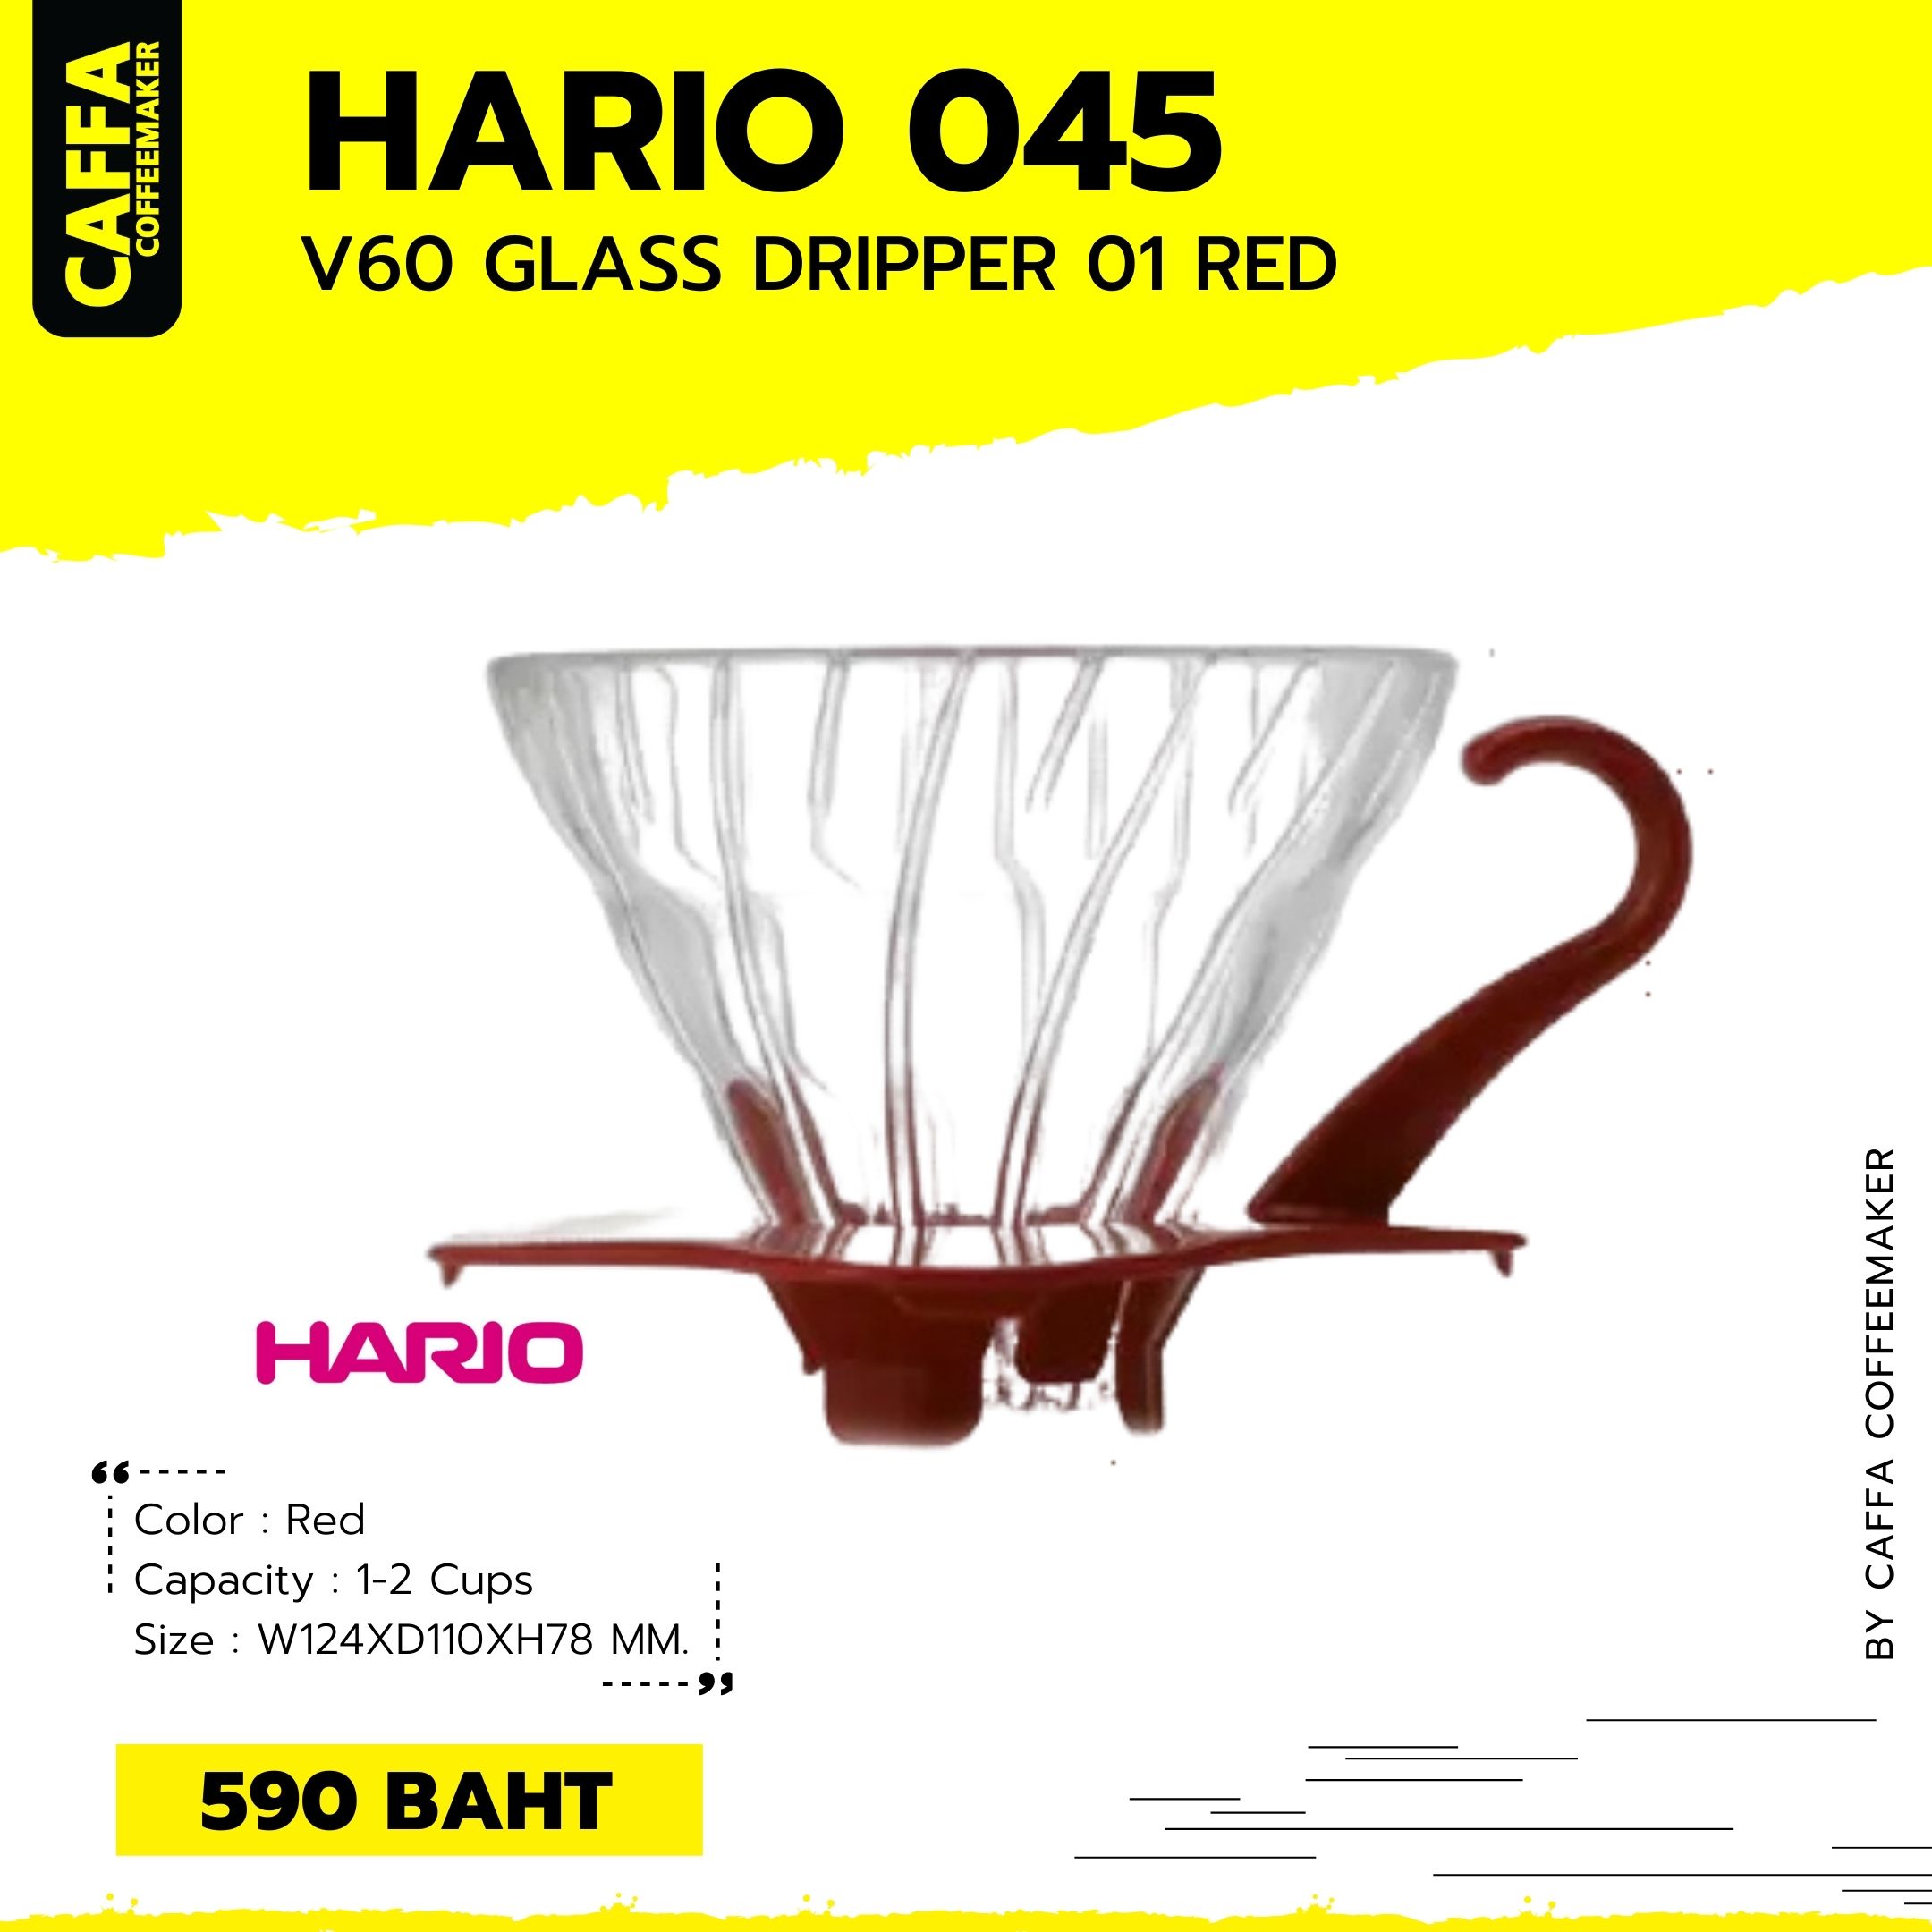 HARIO 045 V60 GLASS DRIPPER 01 RED